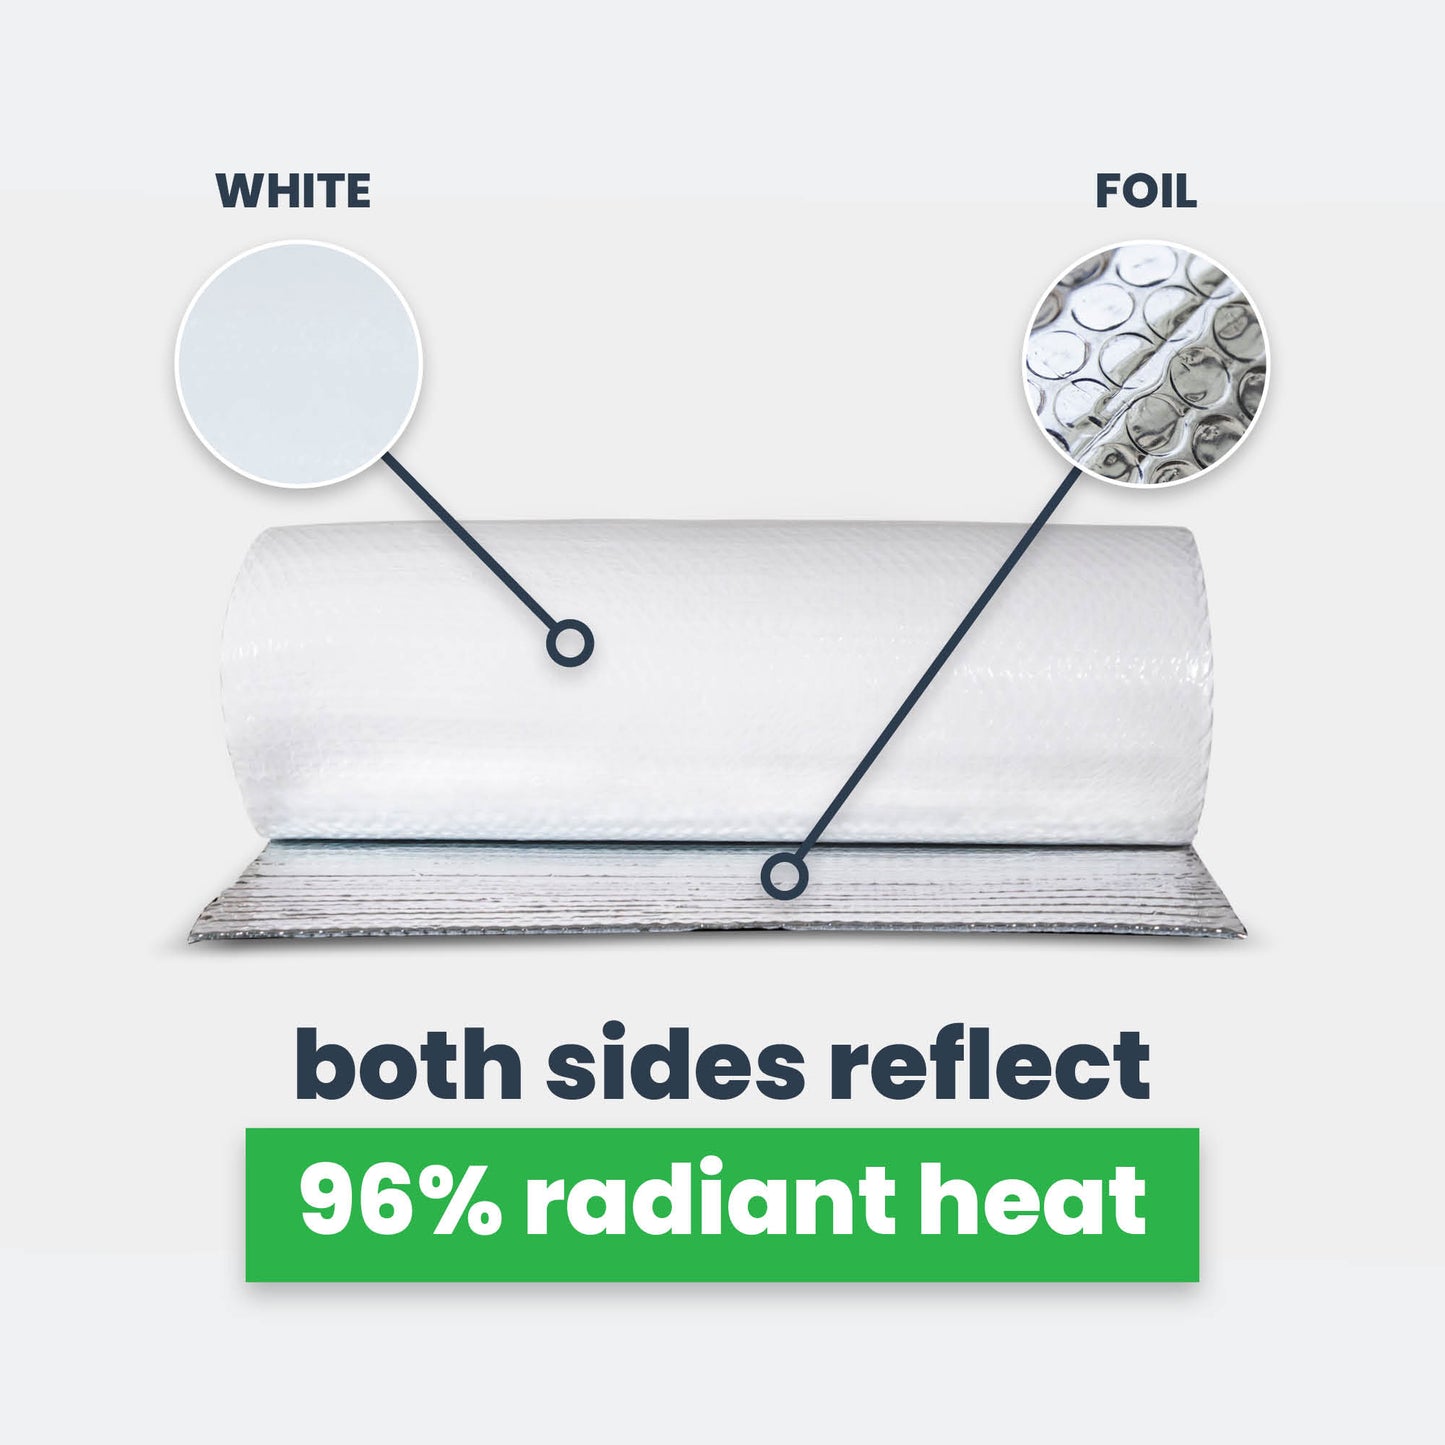 White / Foil, both sides reflect 96% radiant heat